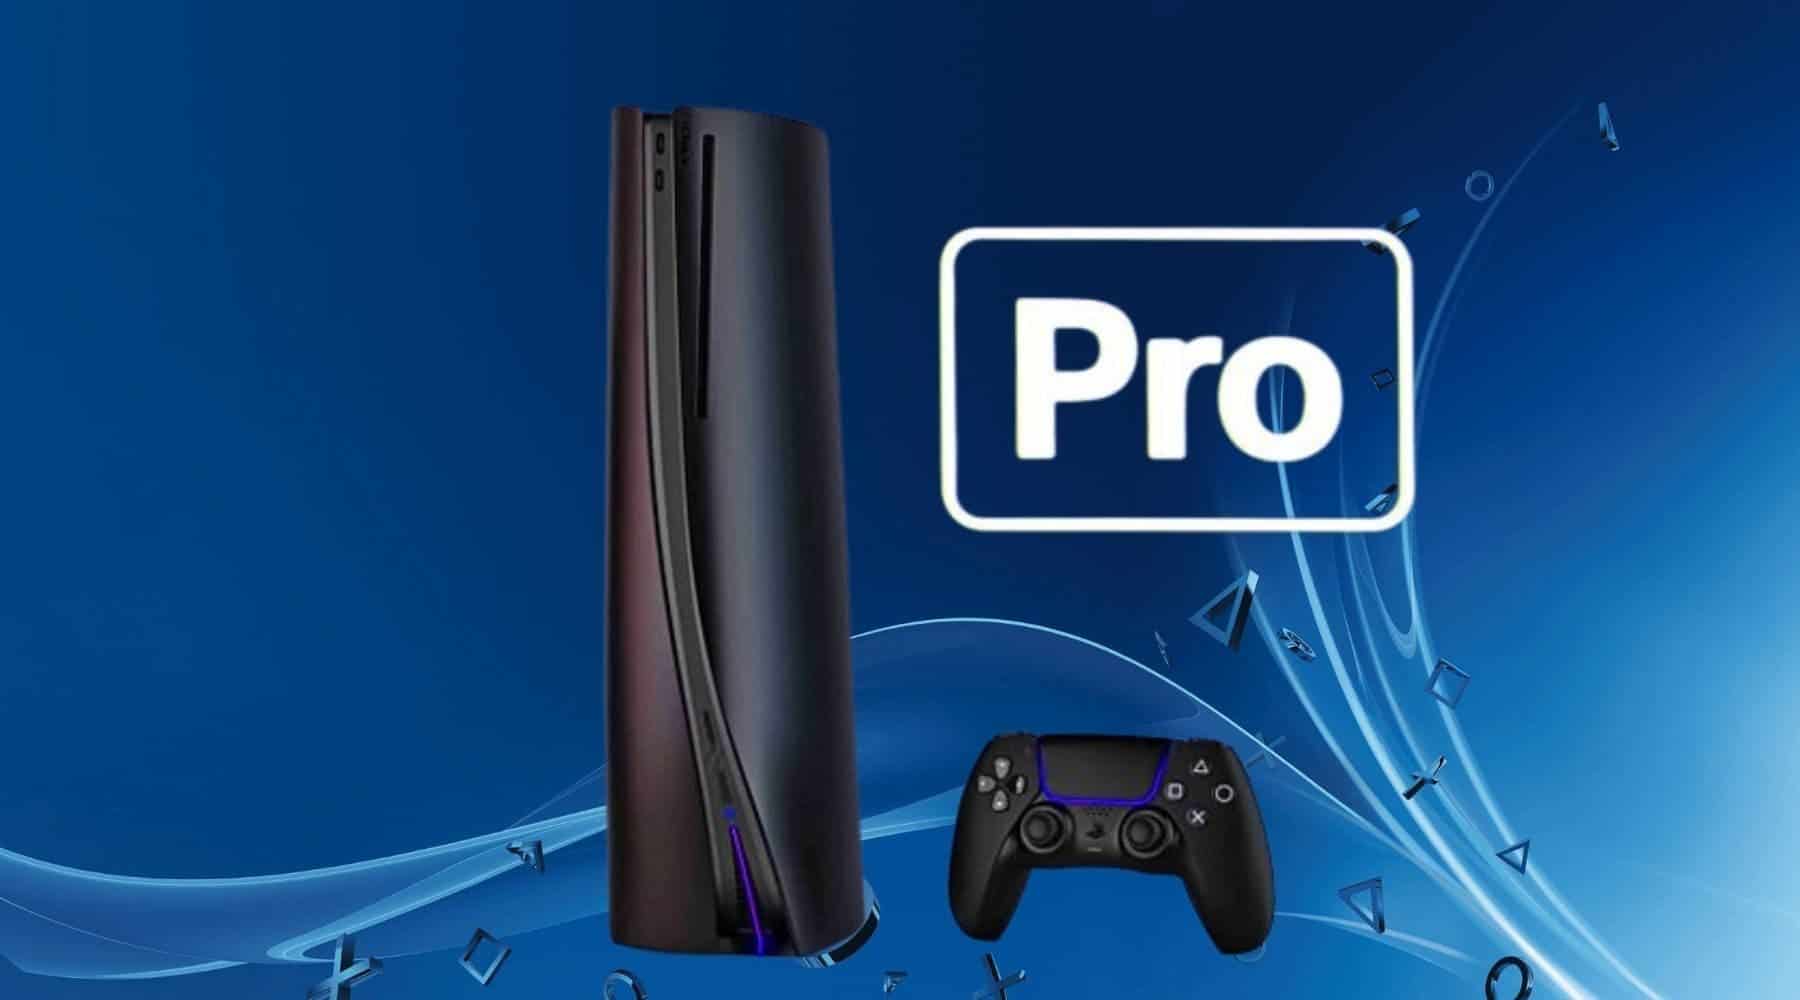 PlayStation 5 Pro